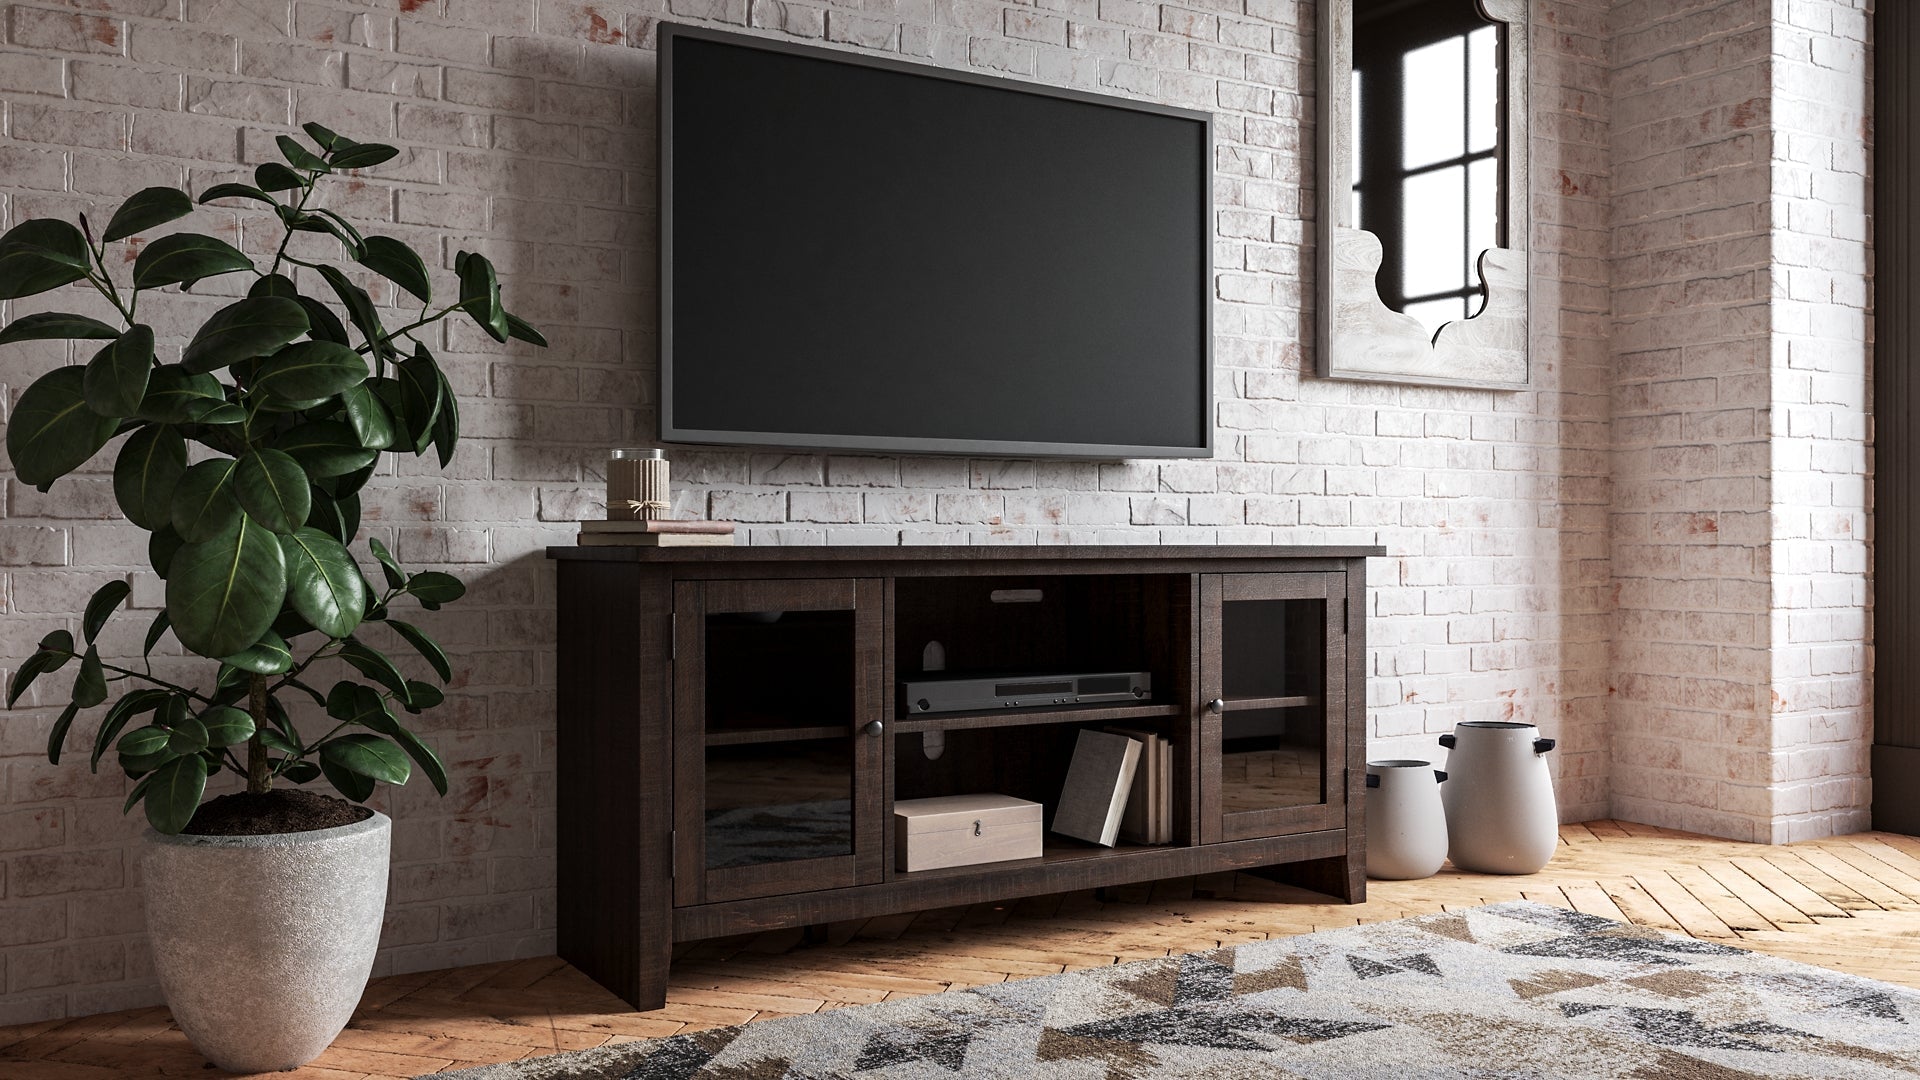 Camiburg LG TV Stand w/Fireplace Option